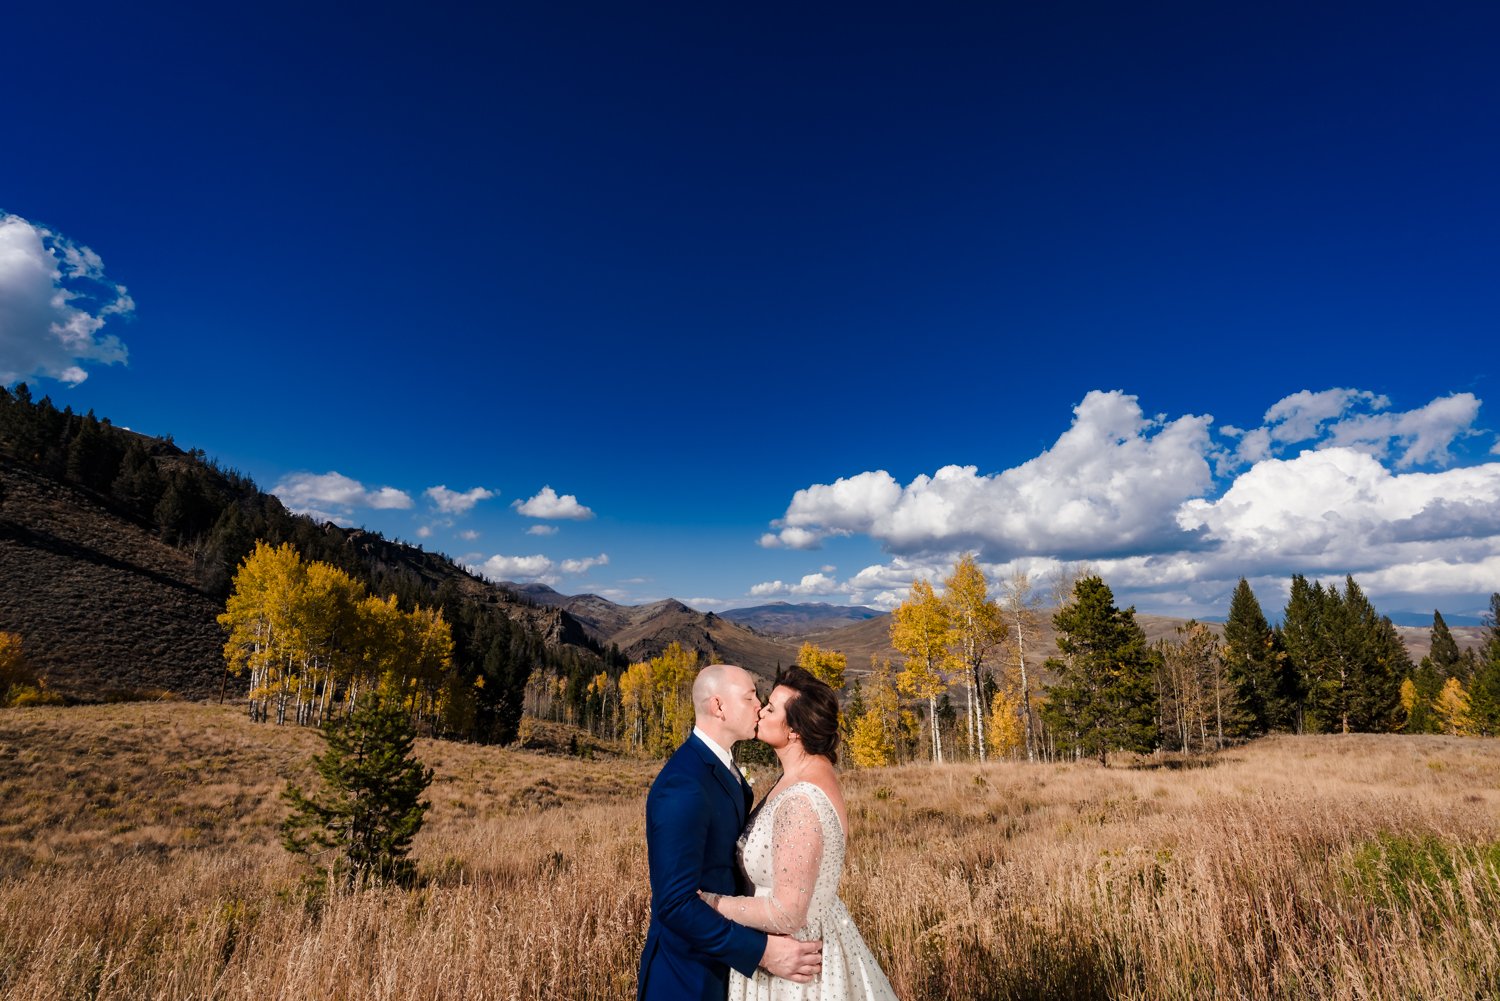 Antler Basin Ranch wedding by Granby photographer, JMGant Photography-52.jpg